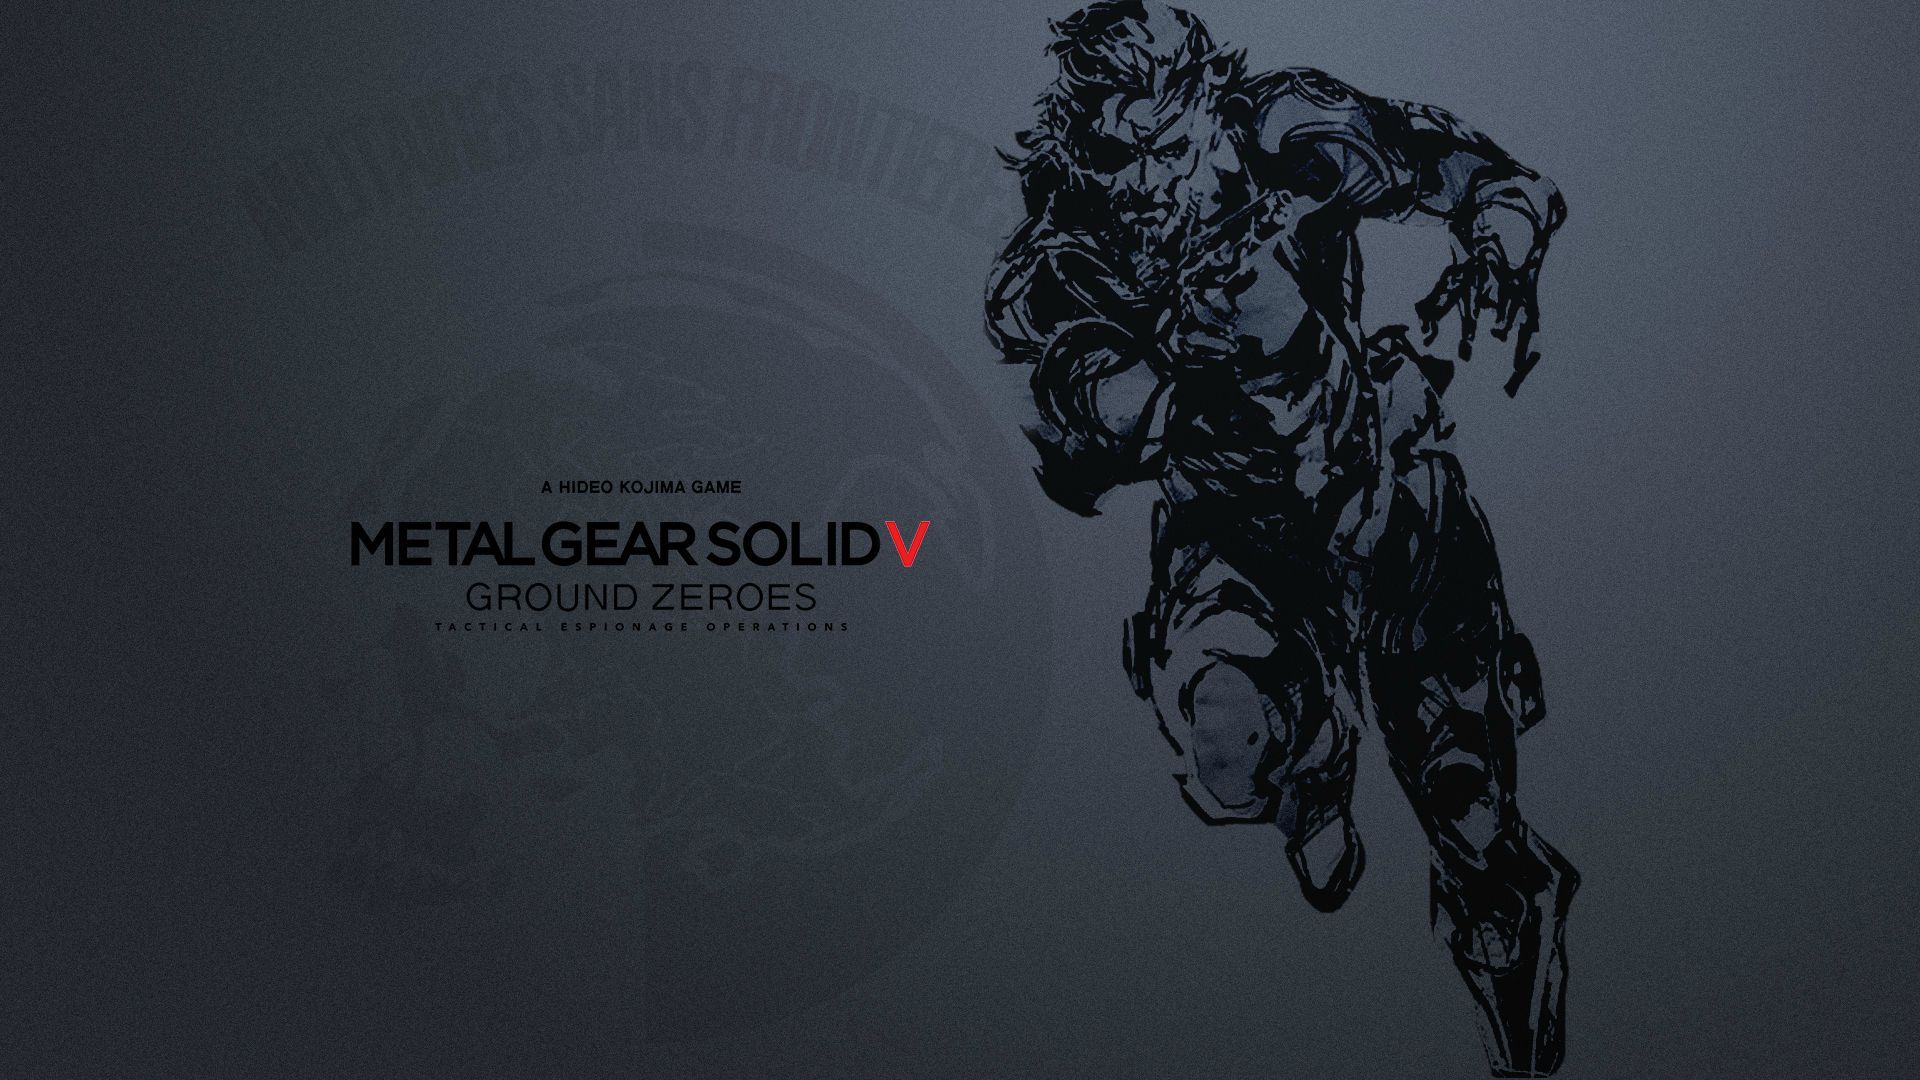 Metal Gear Solid V The Phantom Pain Game HD Wallpaper 16 Preview   10wallpapercom